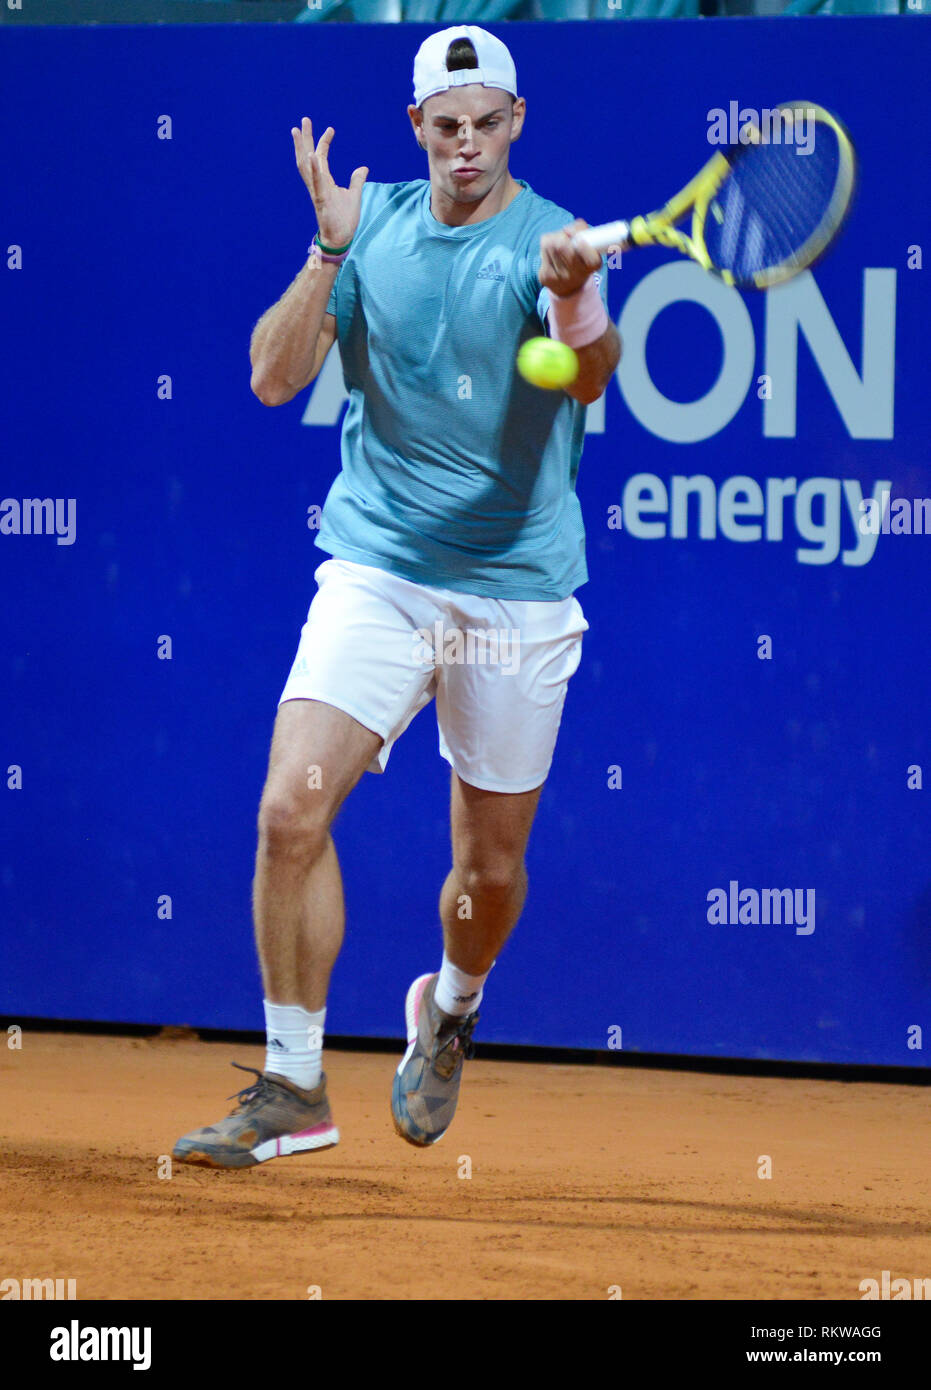 Tennis Player Maximilian Marterer (Deutschland). Argentinien Open 2019  Stockfotografie - Alamy